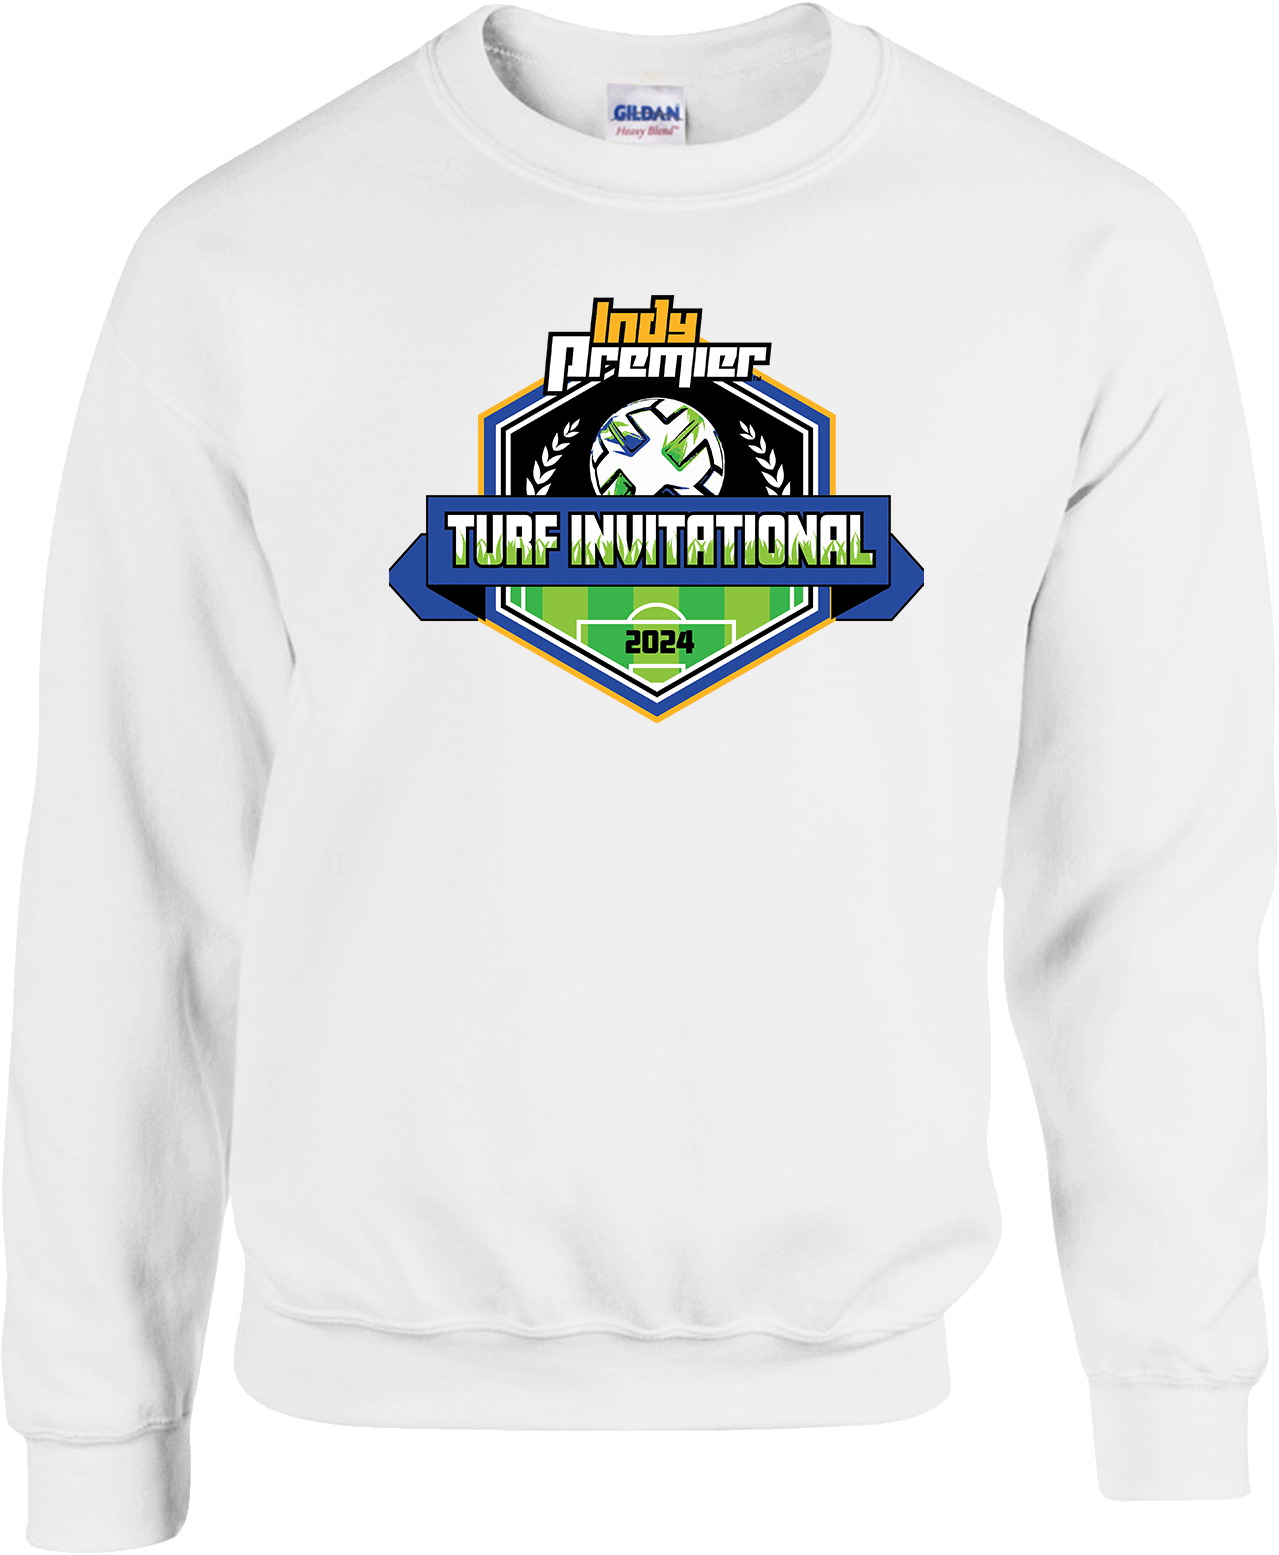 Crew Sweatershirt - 2024 Indy Premier Turf Invitational